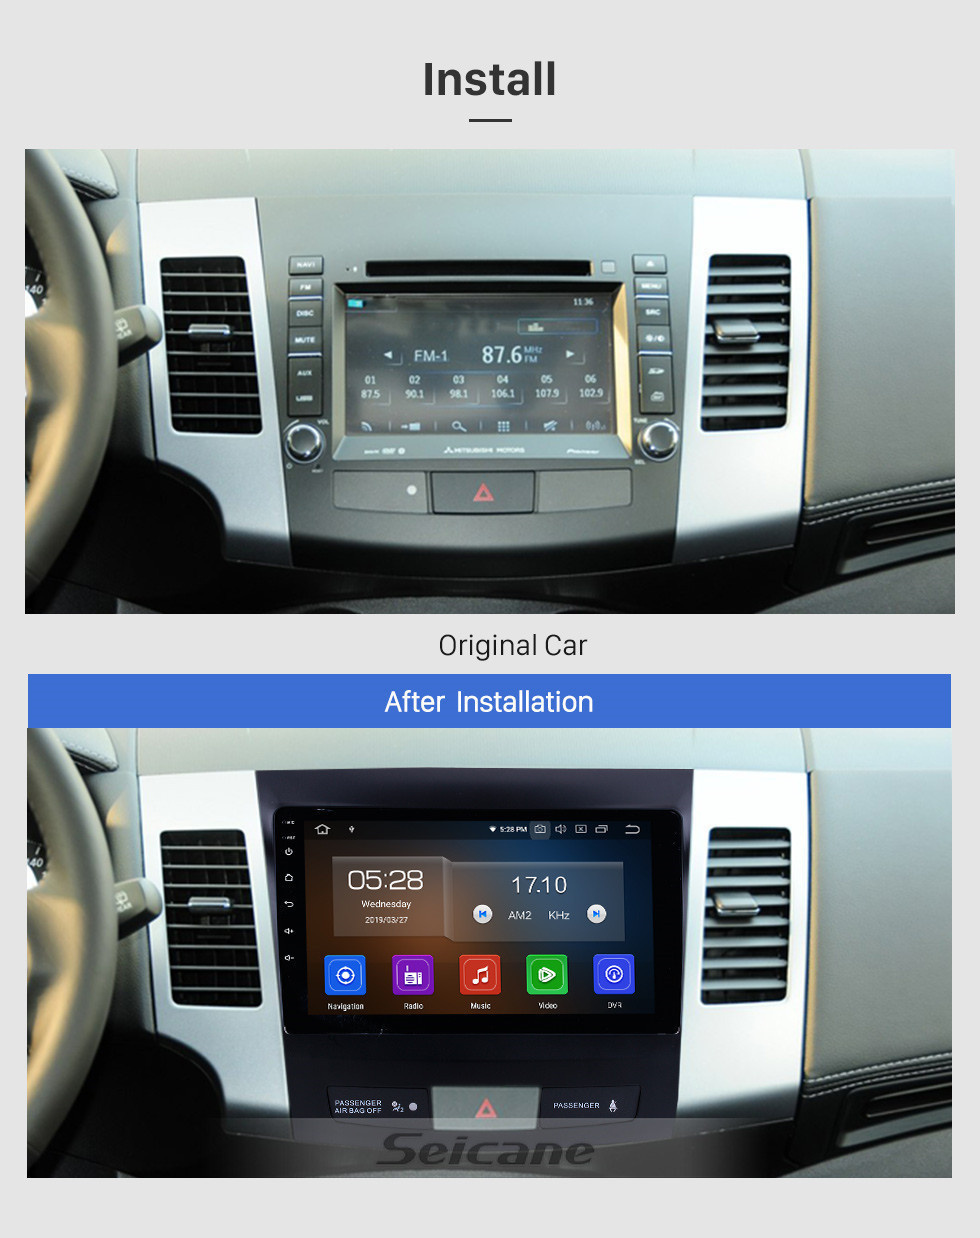 Seicane 9 pulgadas Android 11.0 Radio de pantalla táctil Bluetooth Sistema de navegación GPS para Mitsubishi OUTLANDER 2006-2014 Soporte TPMS DVR OBD II USB SD 3G WiFi Cámara trasera Control del volante HD 1080P Video AUX